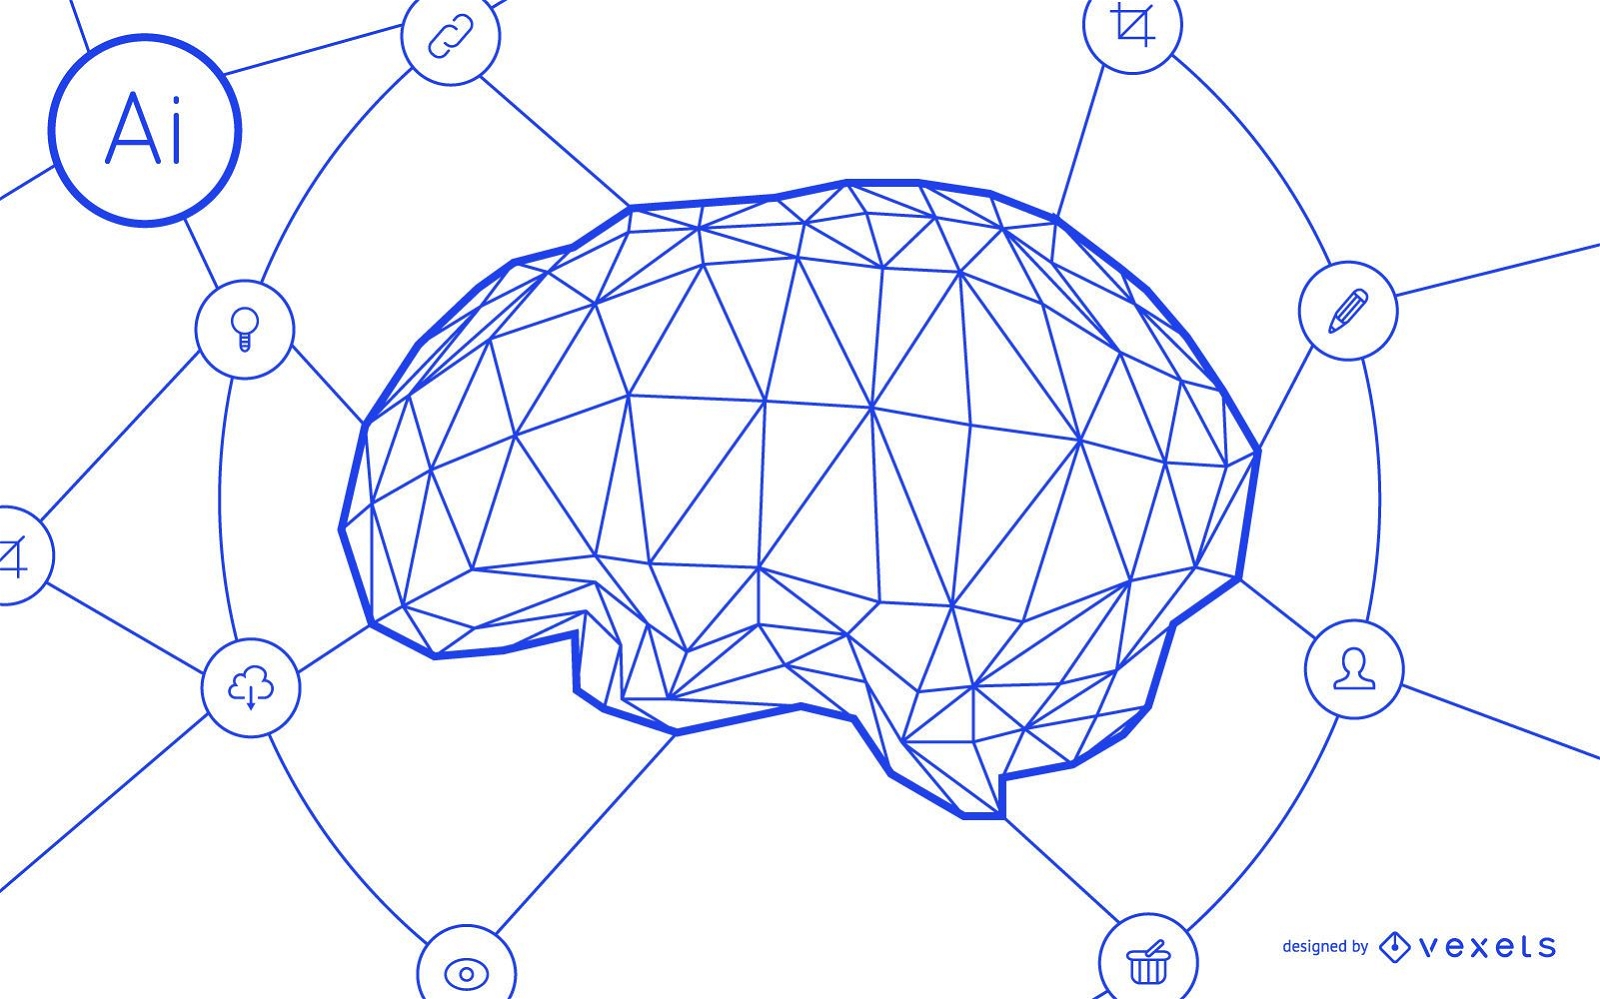 Artificial intelligence brain network design